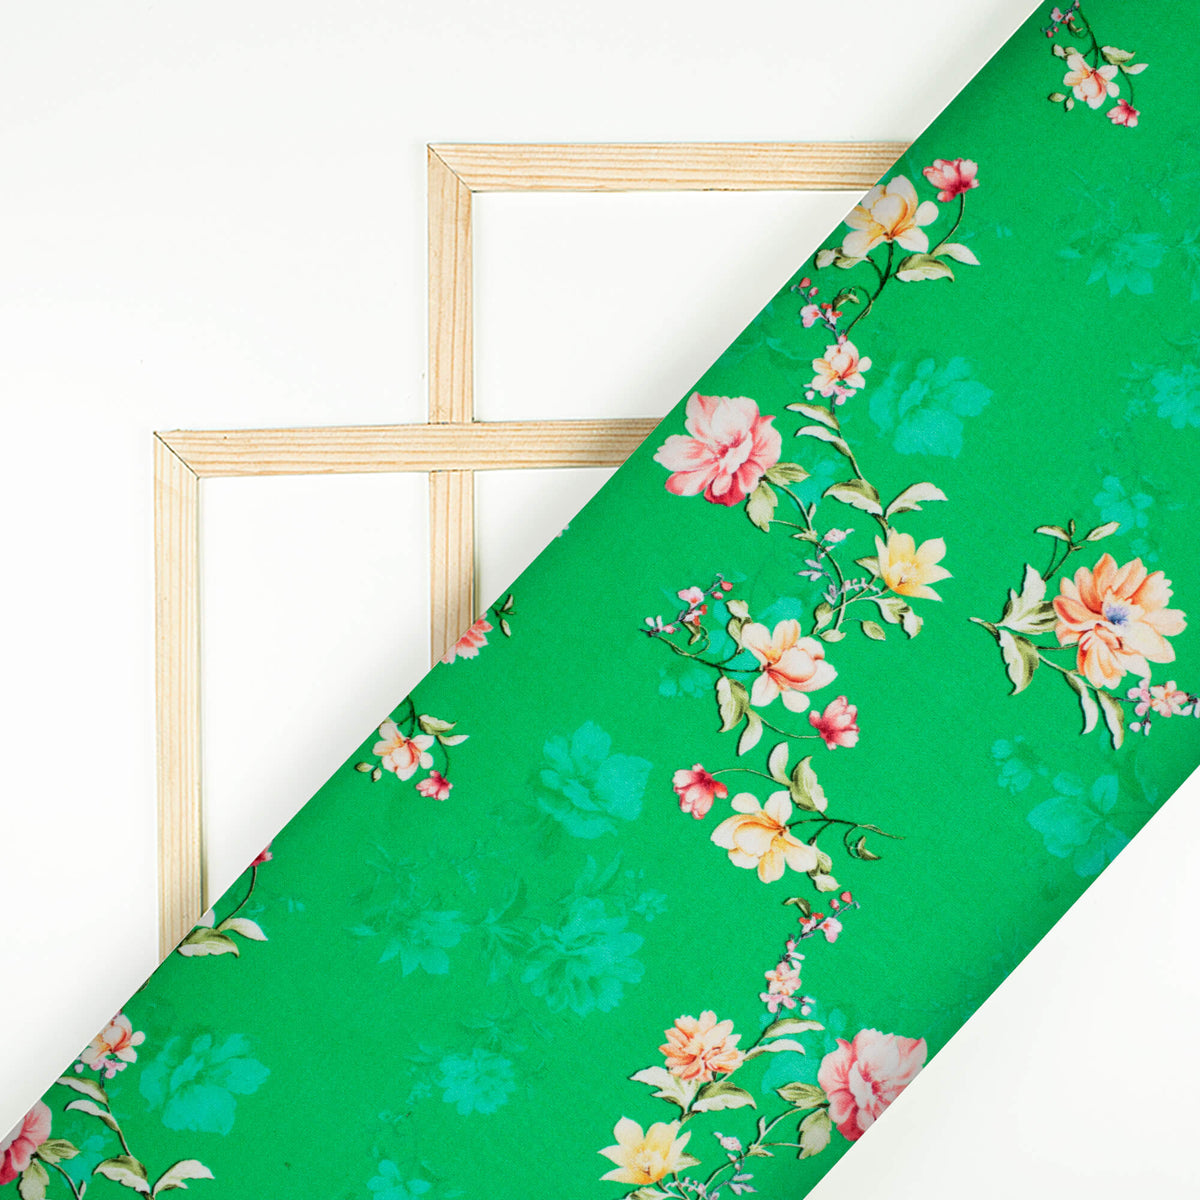 Green And Pink Floral Pattern Digital Print Premium Lush Satin Fabric